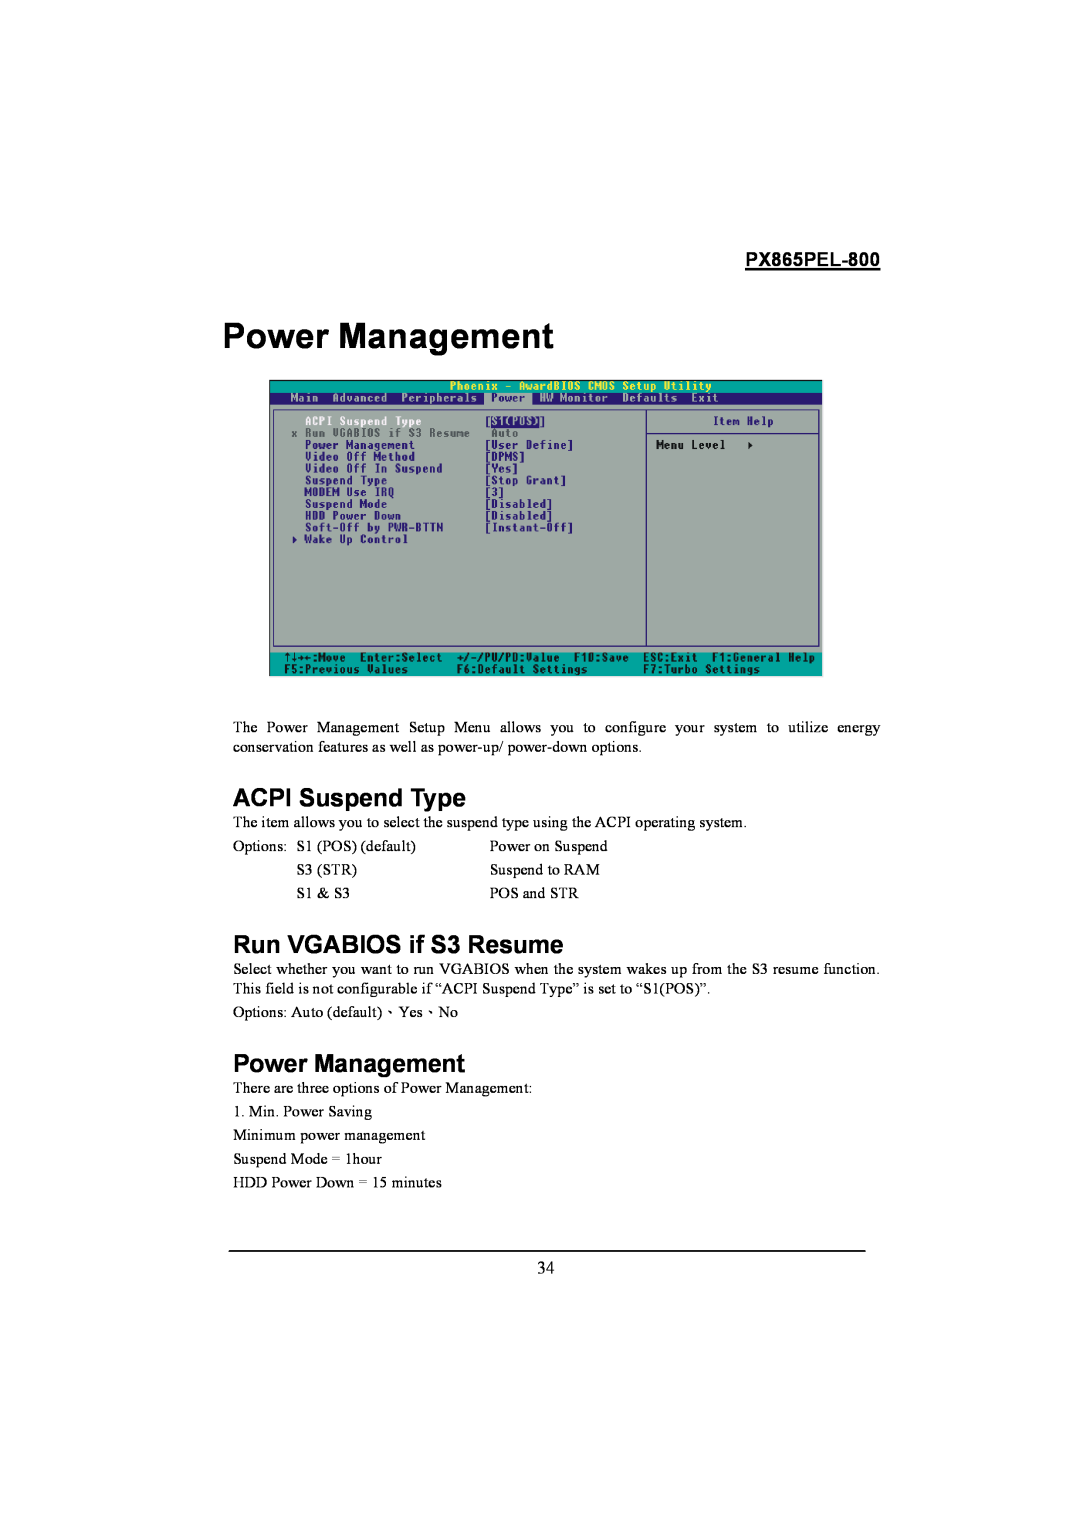 Intel PX865PEL-800 warranty Power Management, ACPI Suspend Type, Run VGABIOS if S3 Resume 